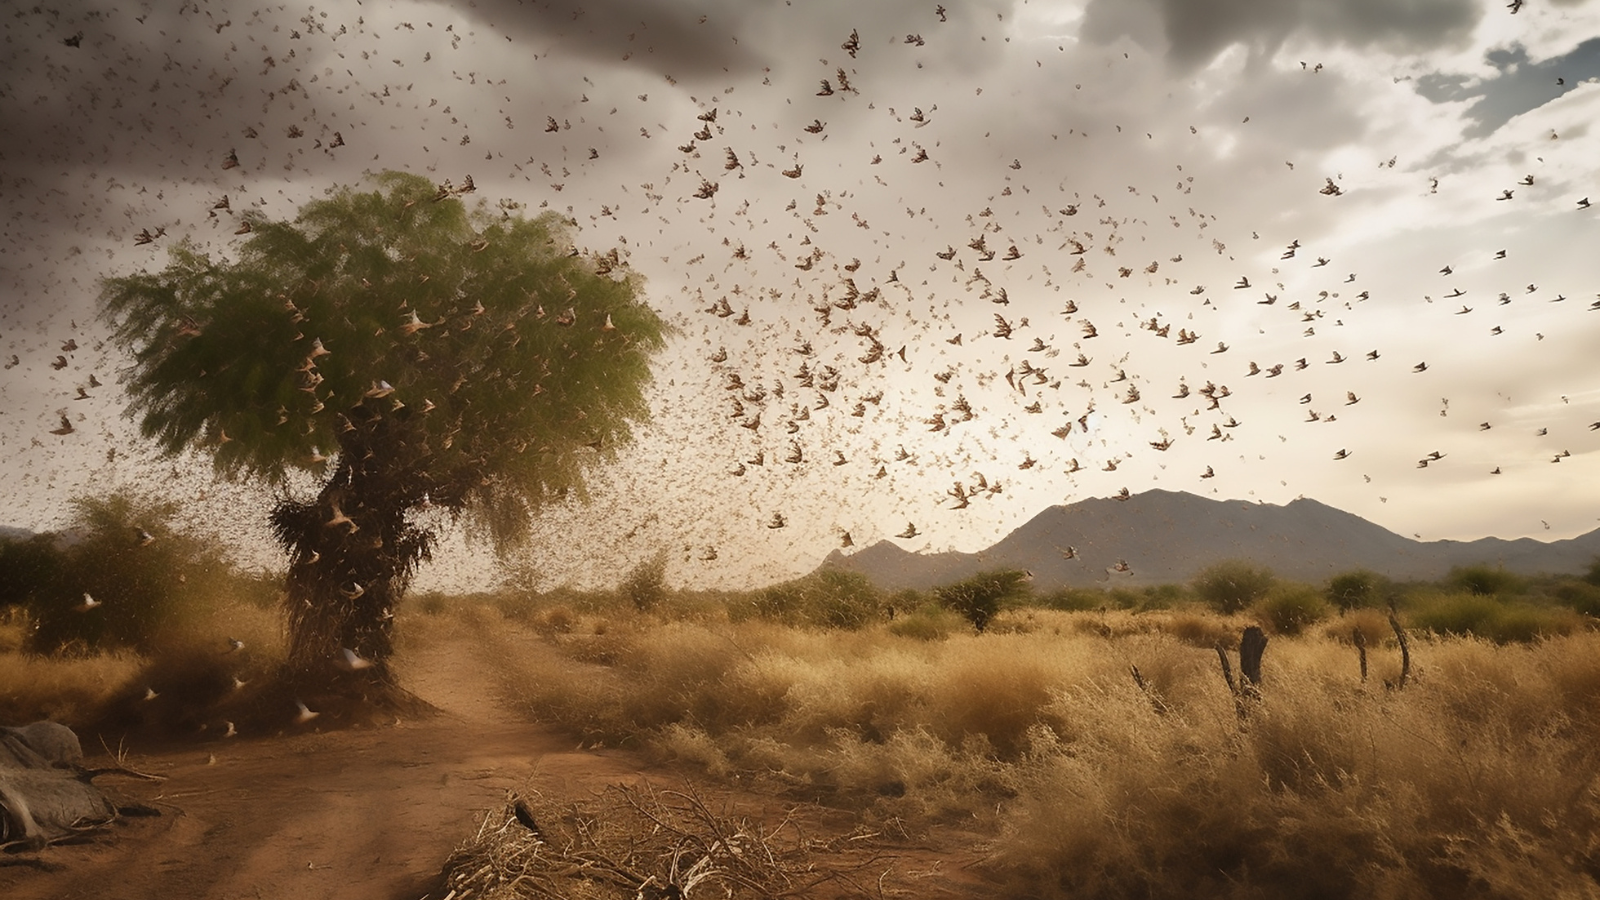 A swarm of locusts in a field.